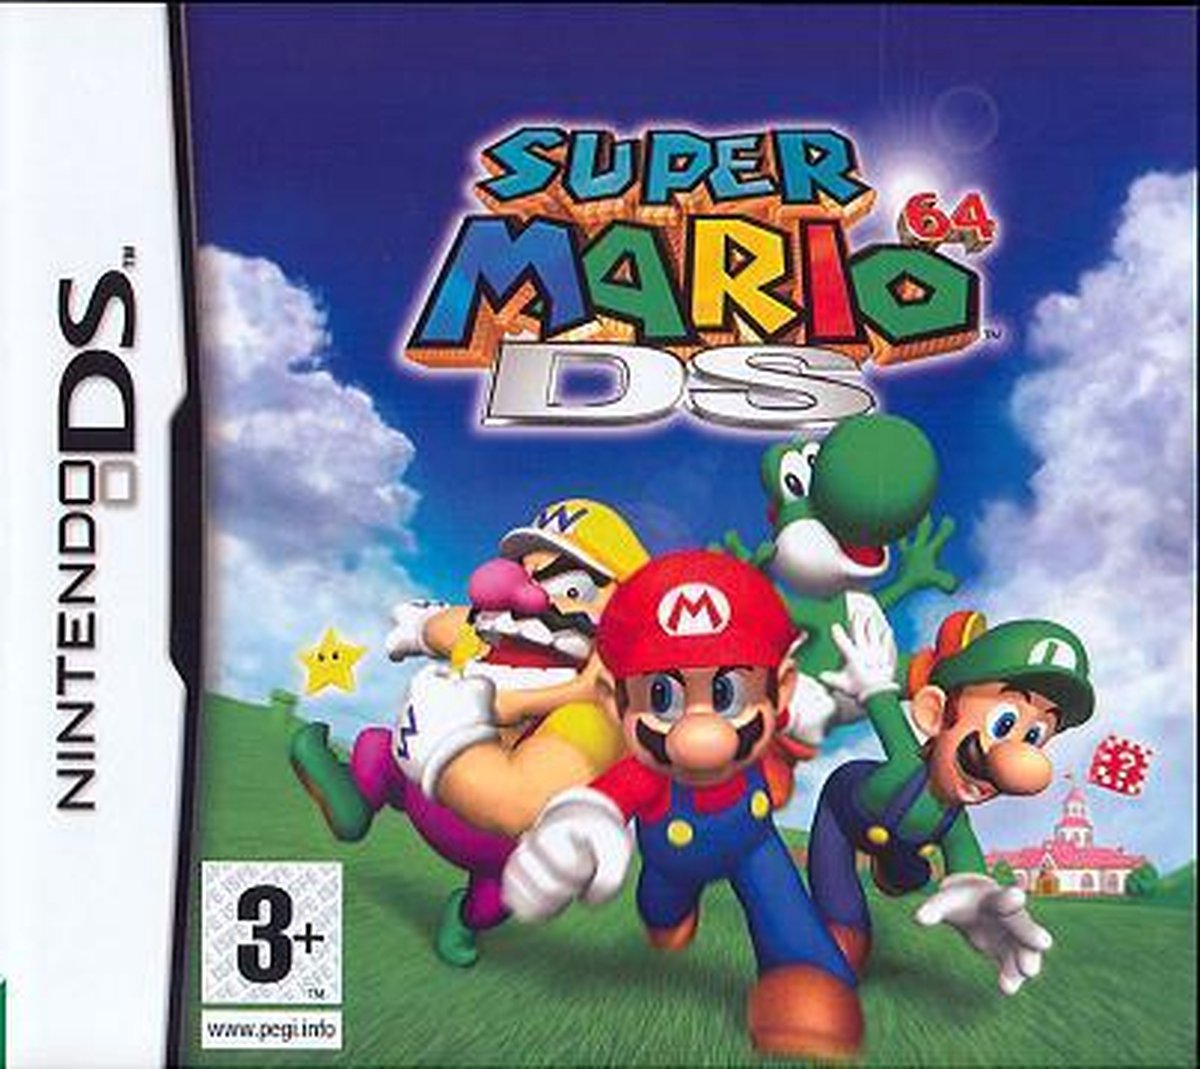 Super Mario 64 - Nintendo DS - Nintendo